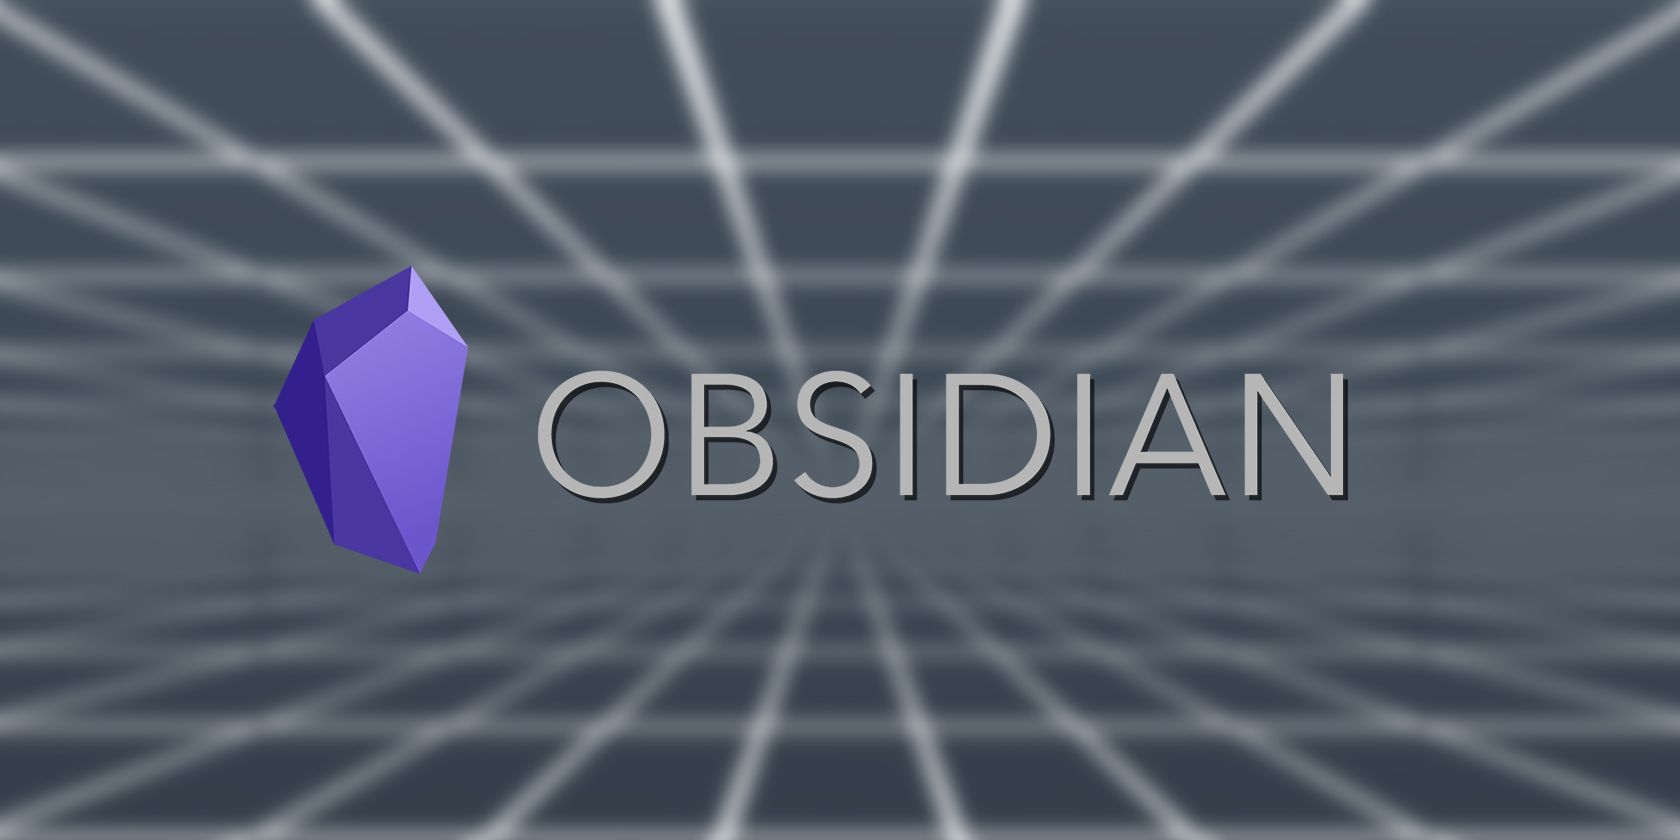 Obsidian logo on a double grid